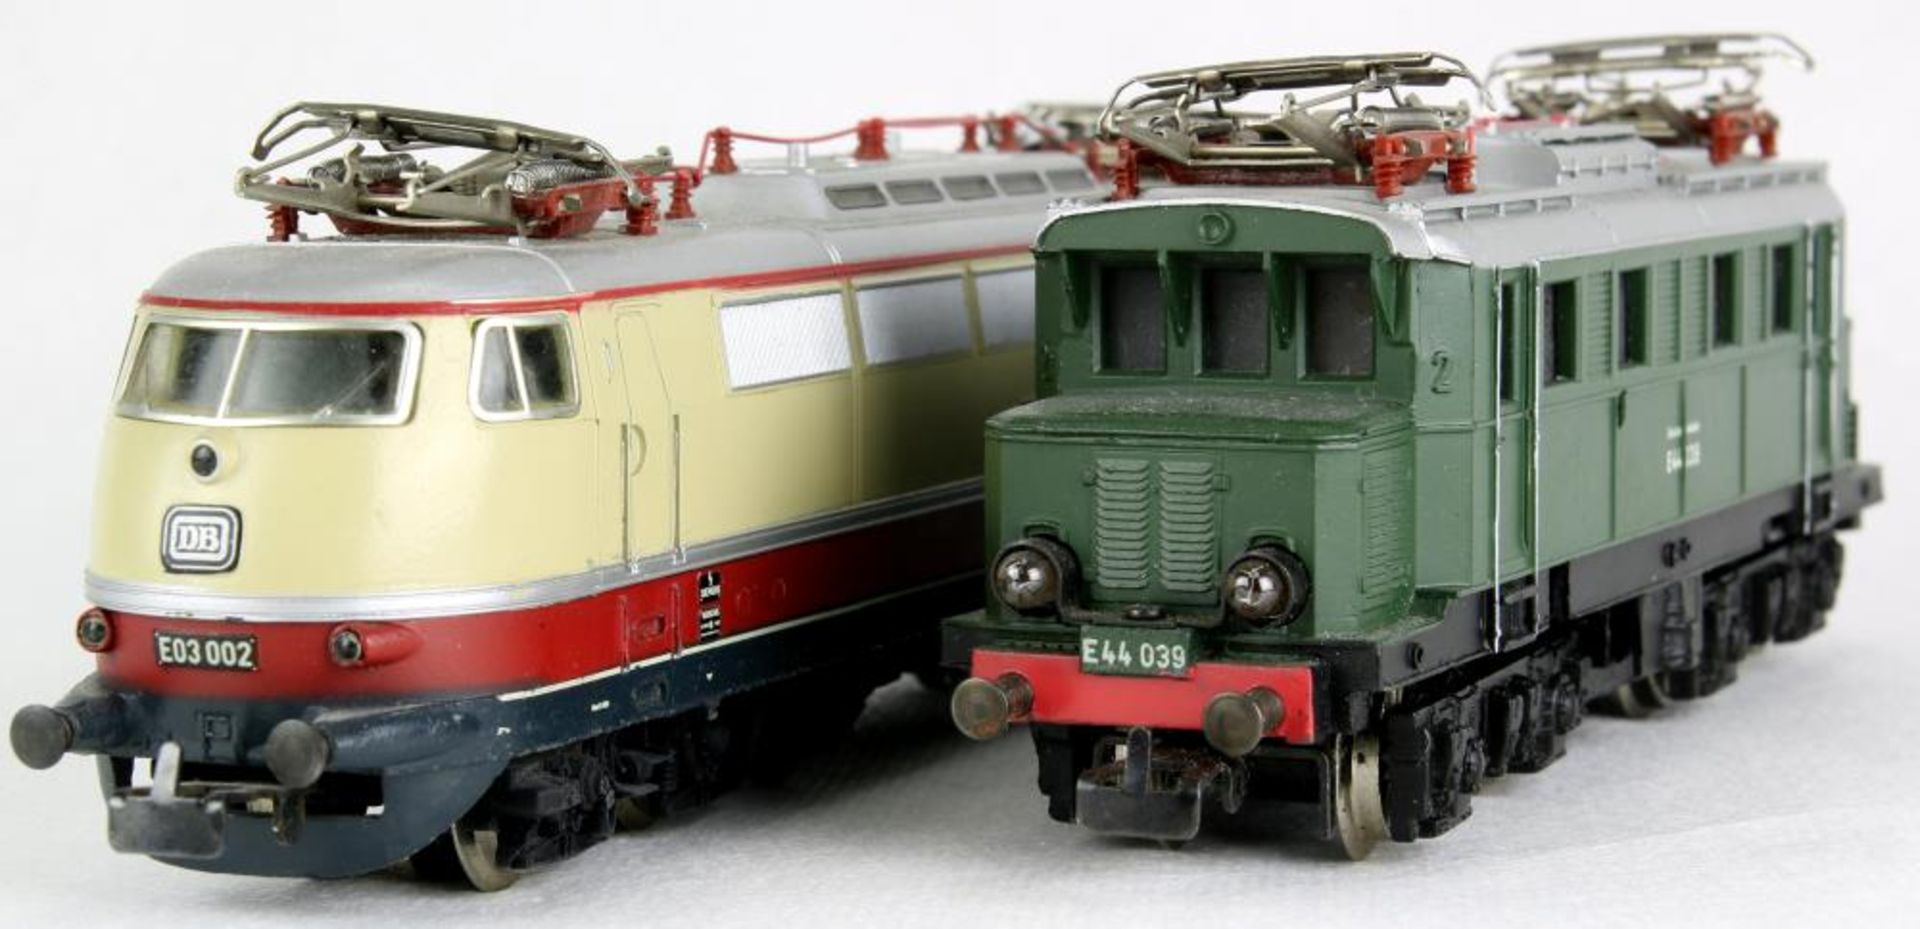 Zwei deutsche E-Loks. Märklin H0. DB E 03 002 und E44 039. Bespielt, teils beschädigt, Funktion